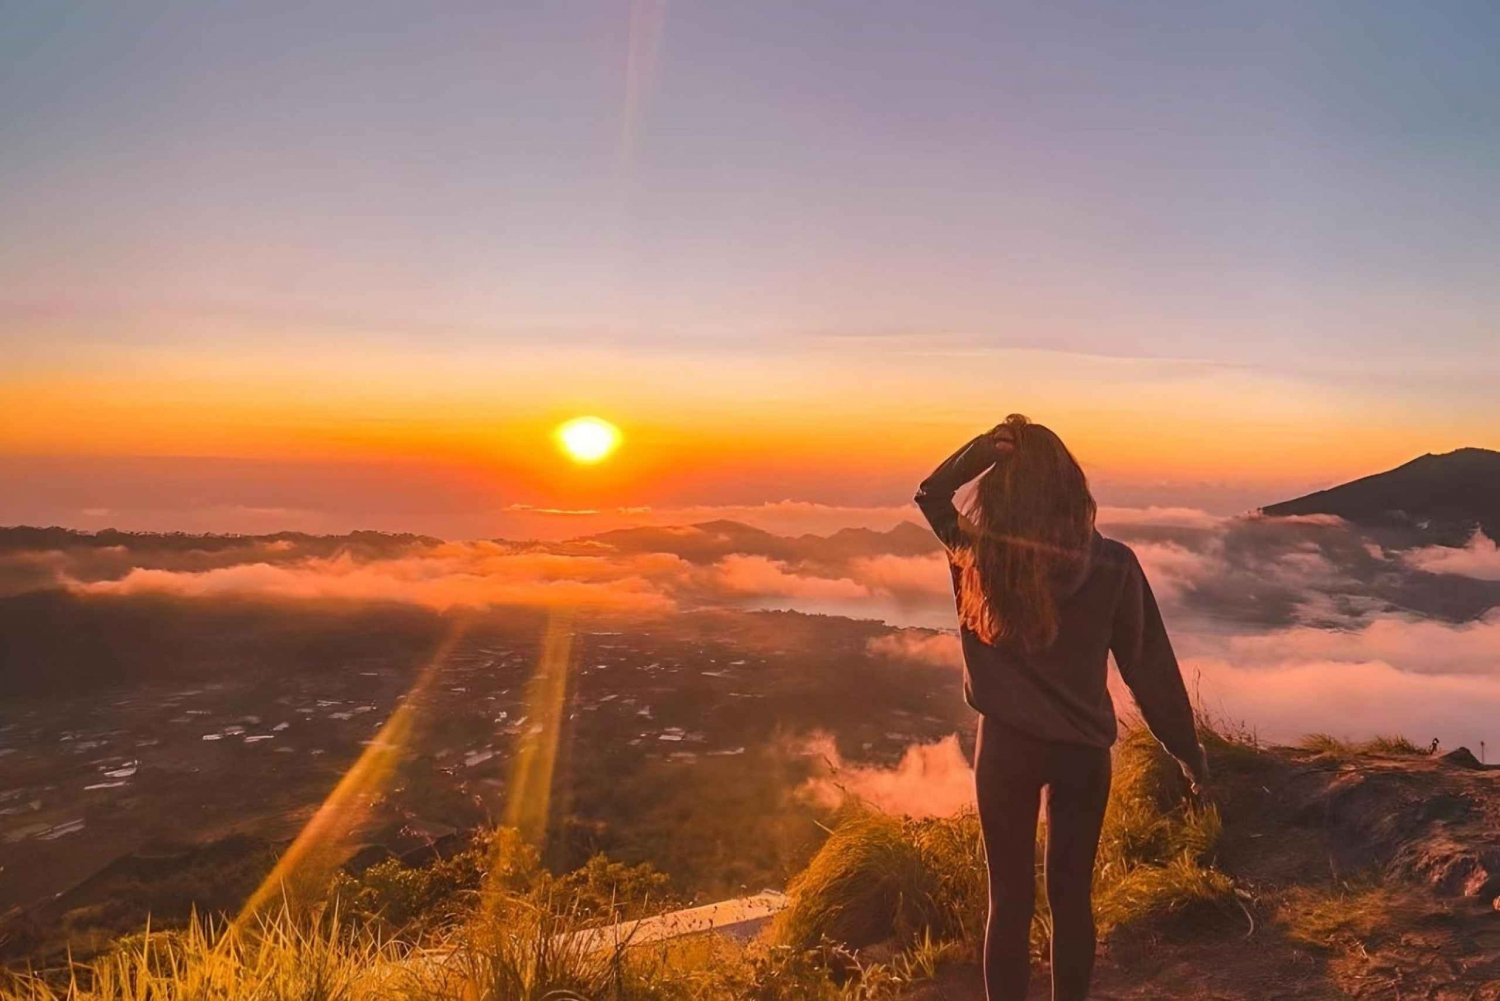 Mount Batur Sunrise Trekking Experience